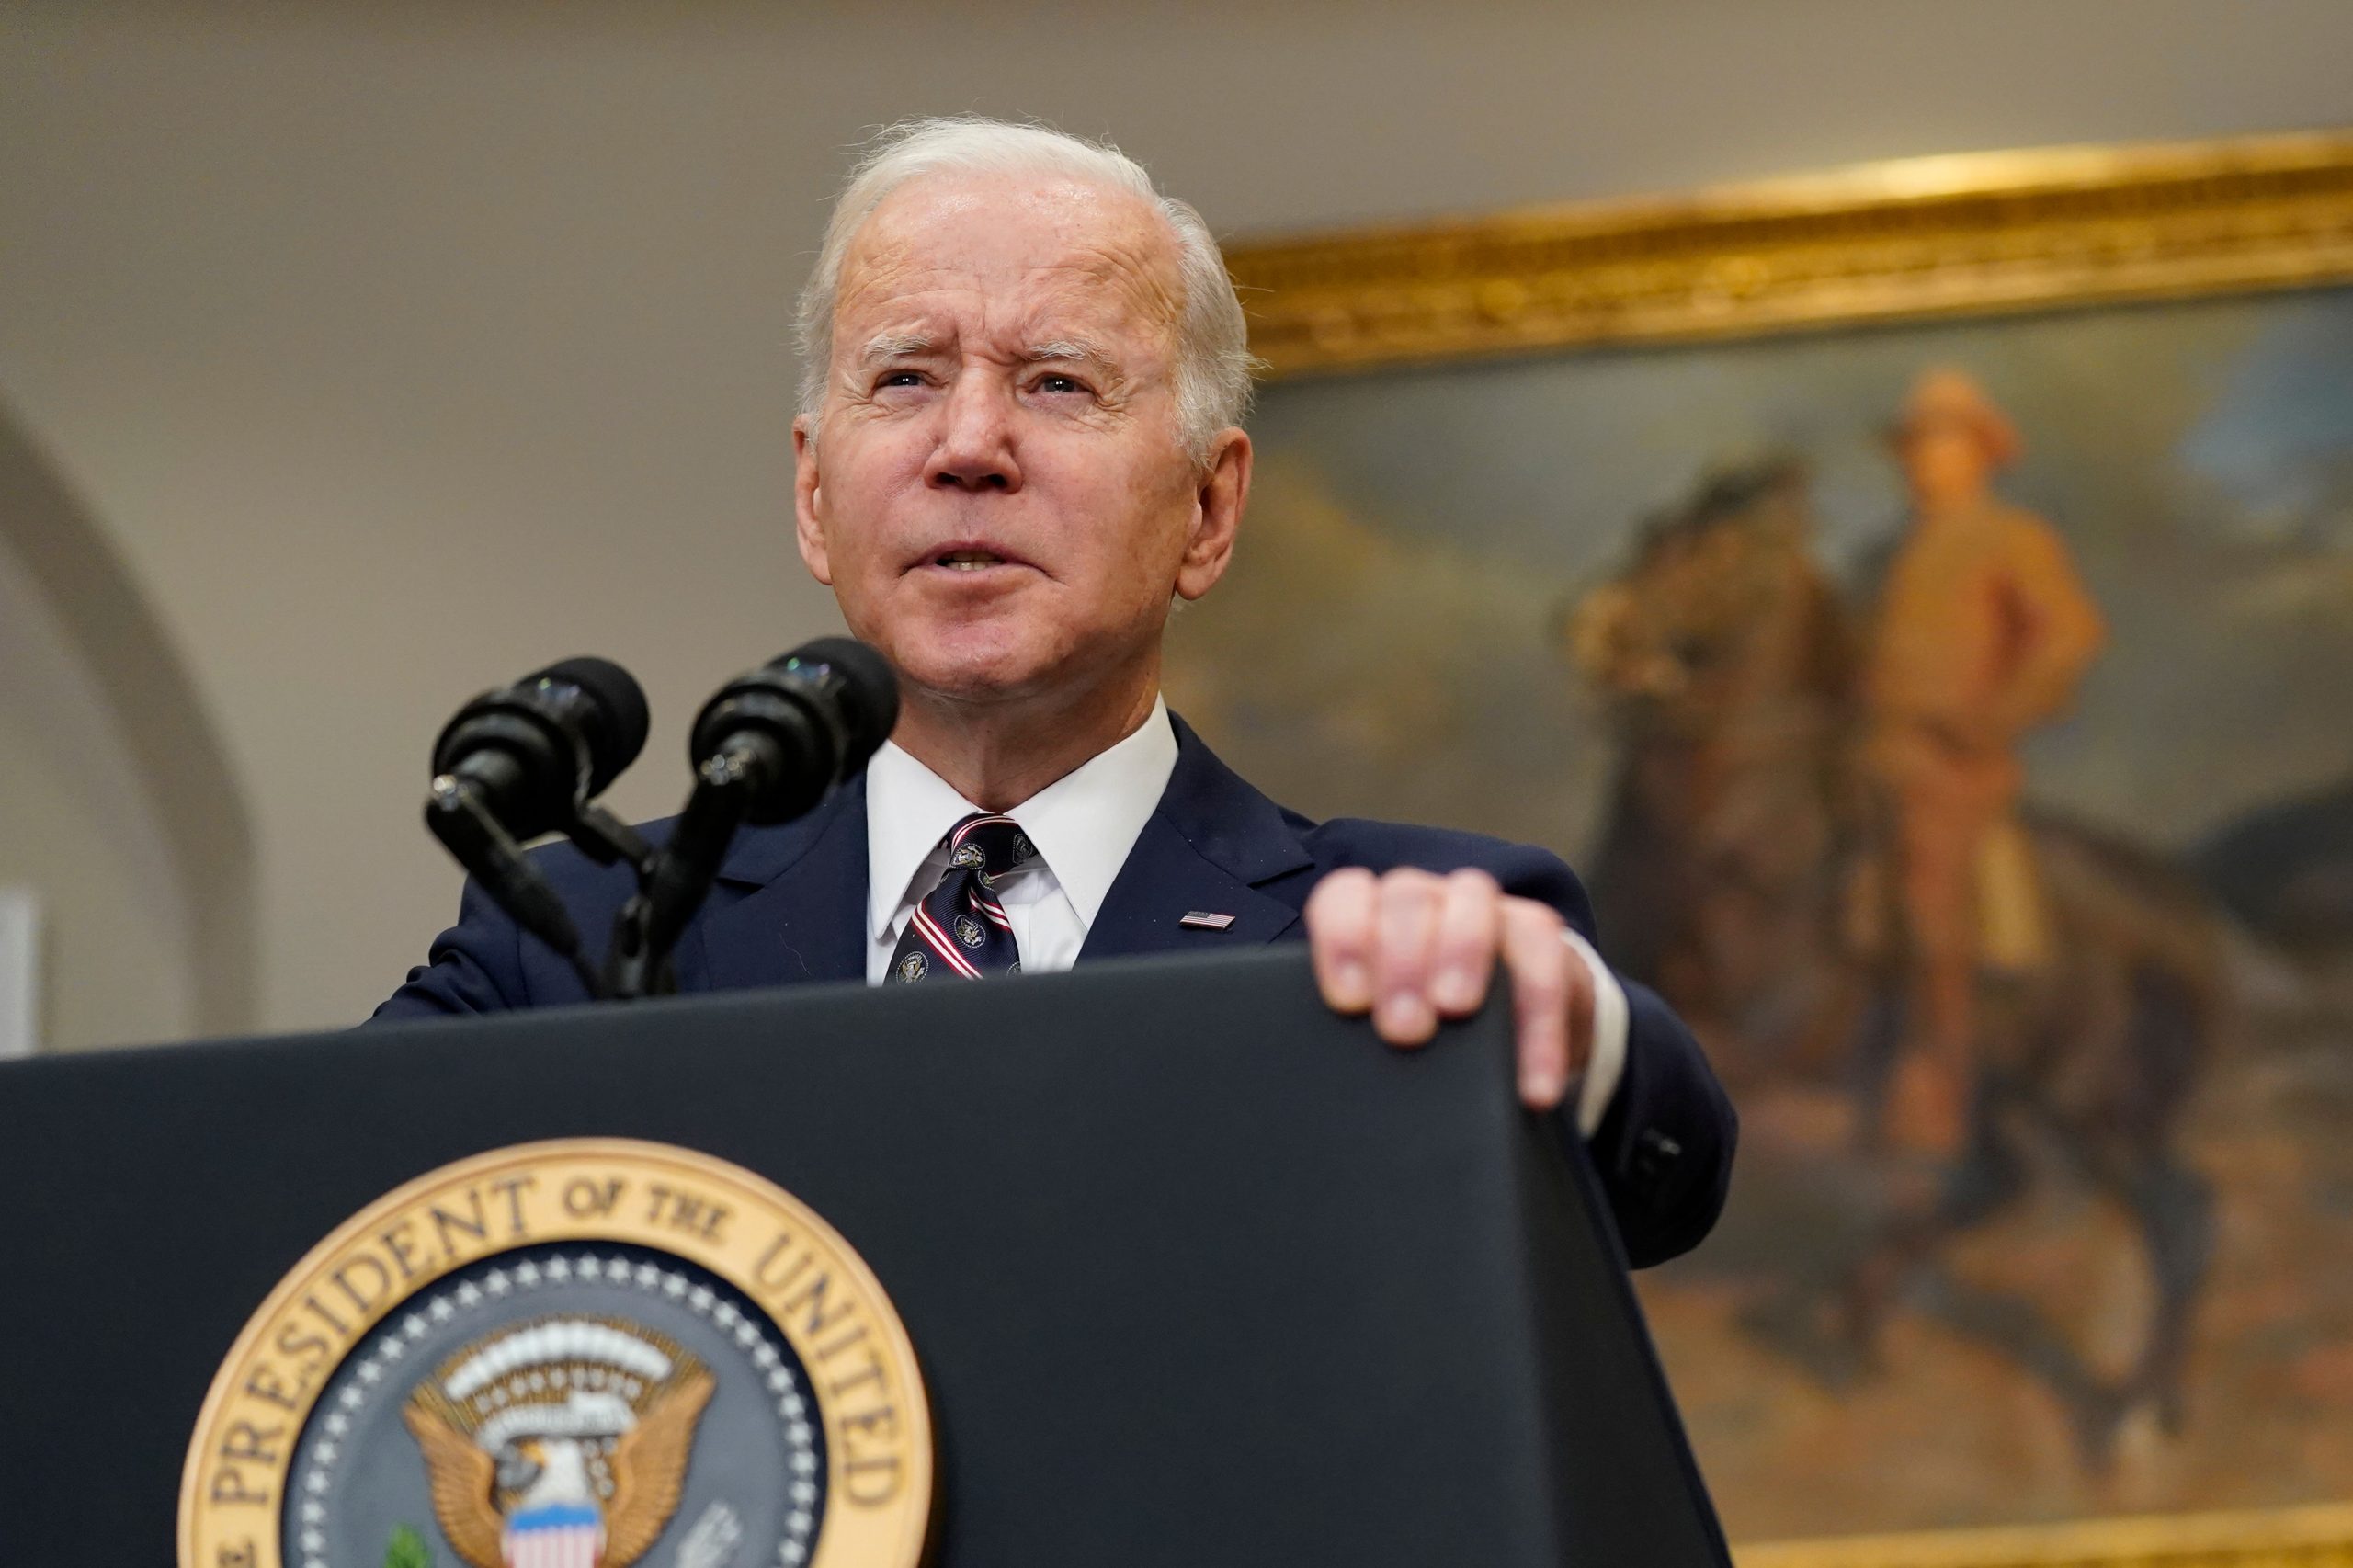 US President Joe Biden’s UN speech will target Russia, White House says